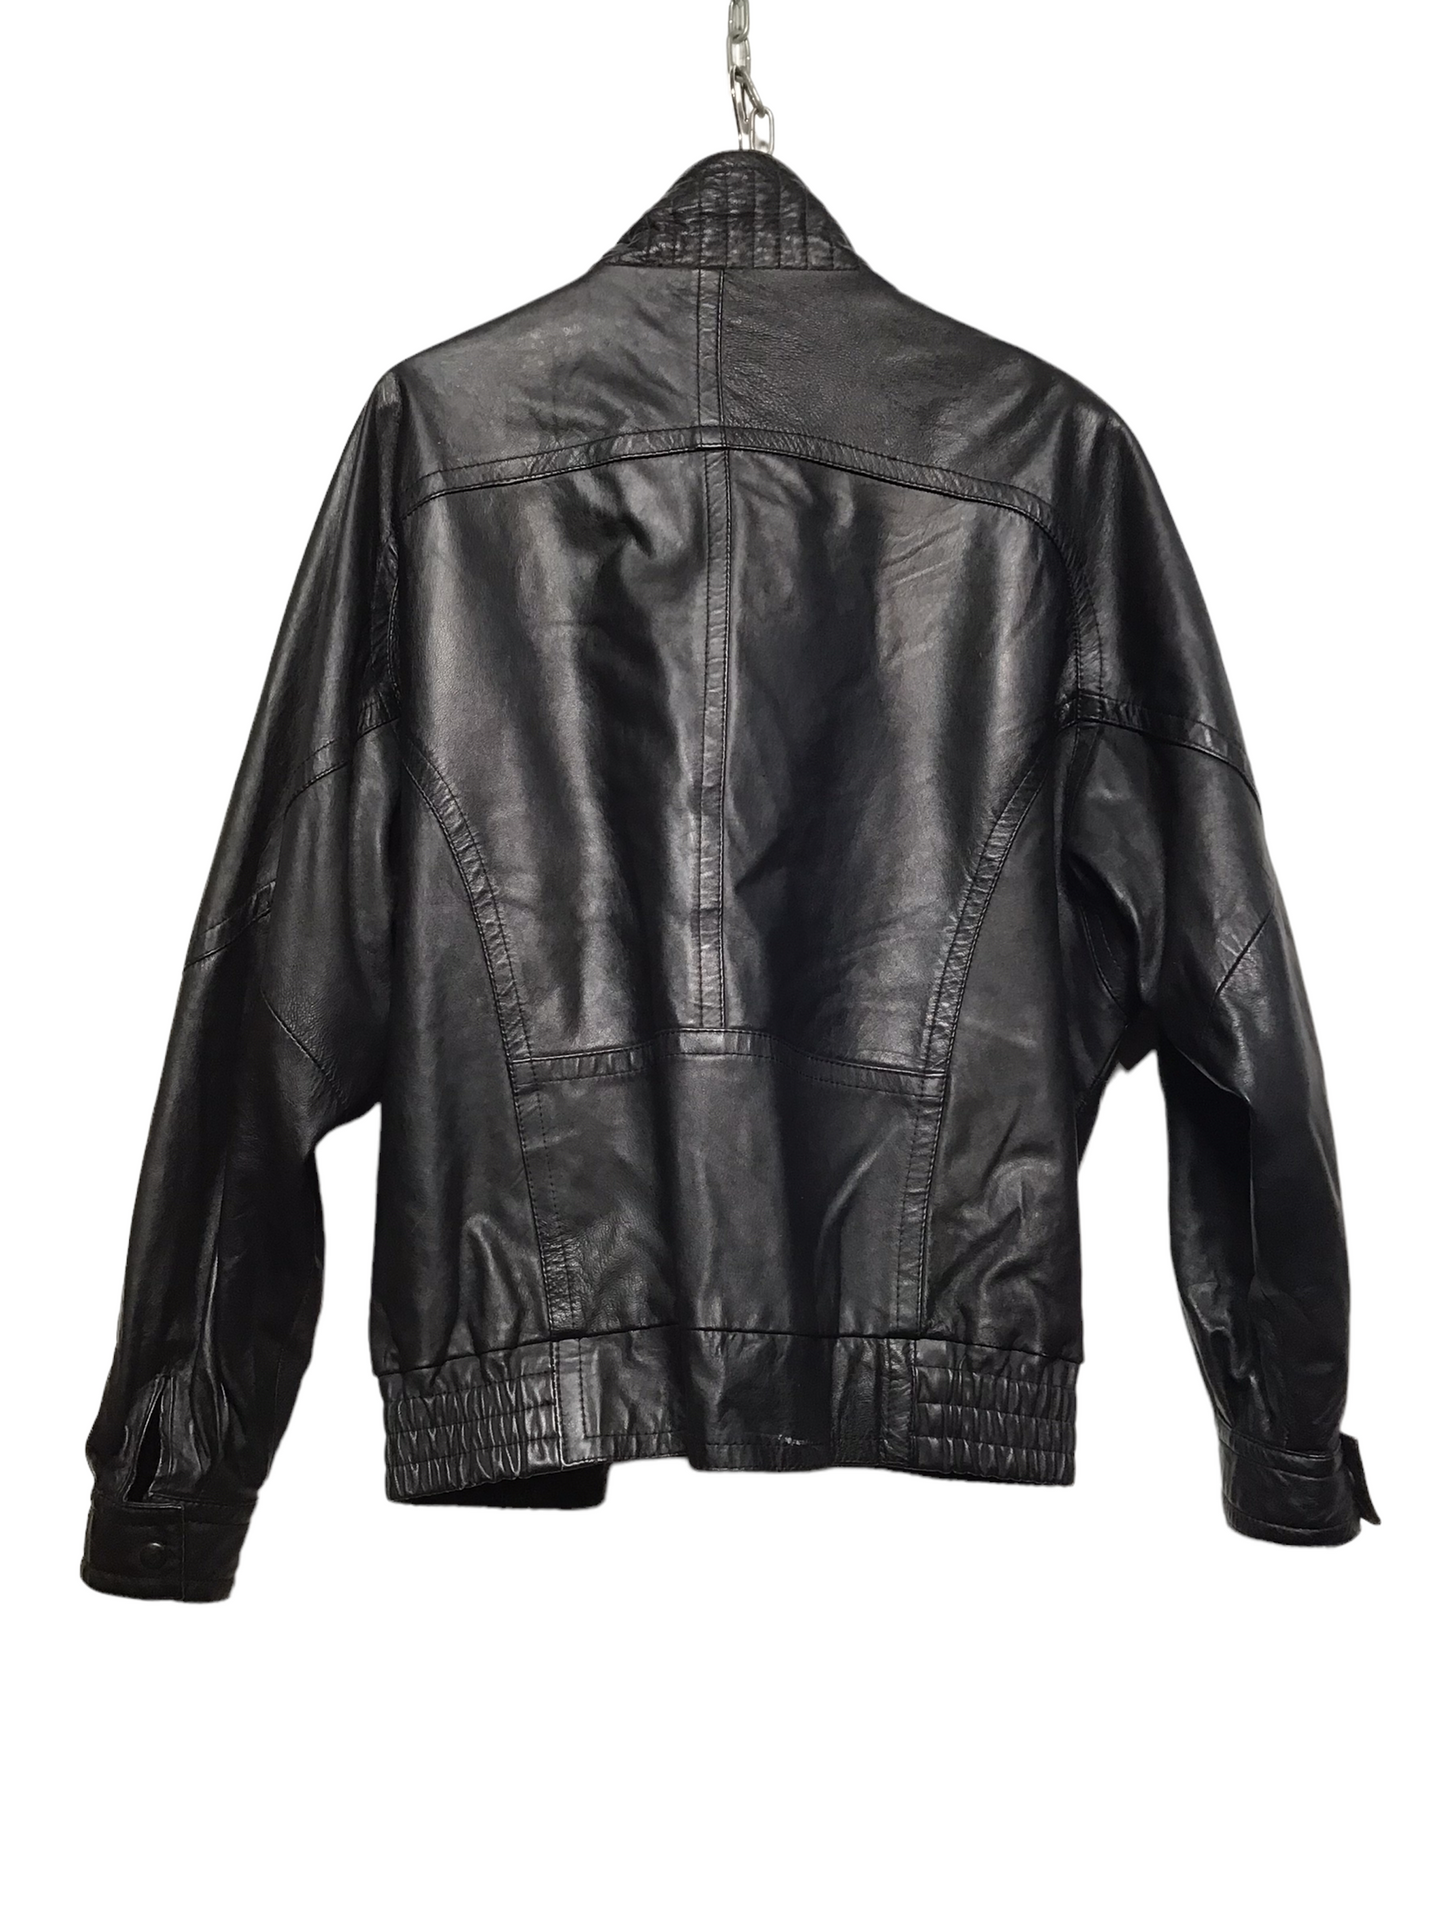 Black Leather Jacket (Size XL)